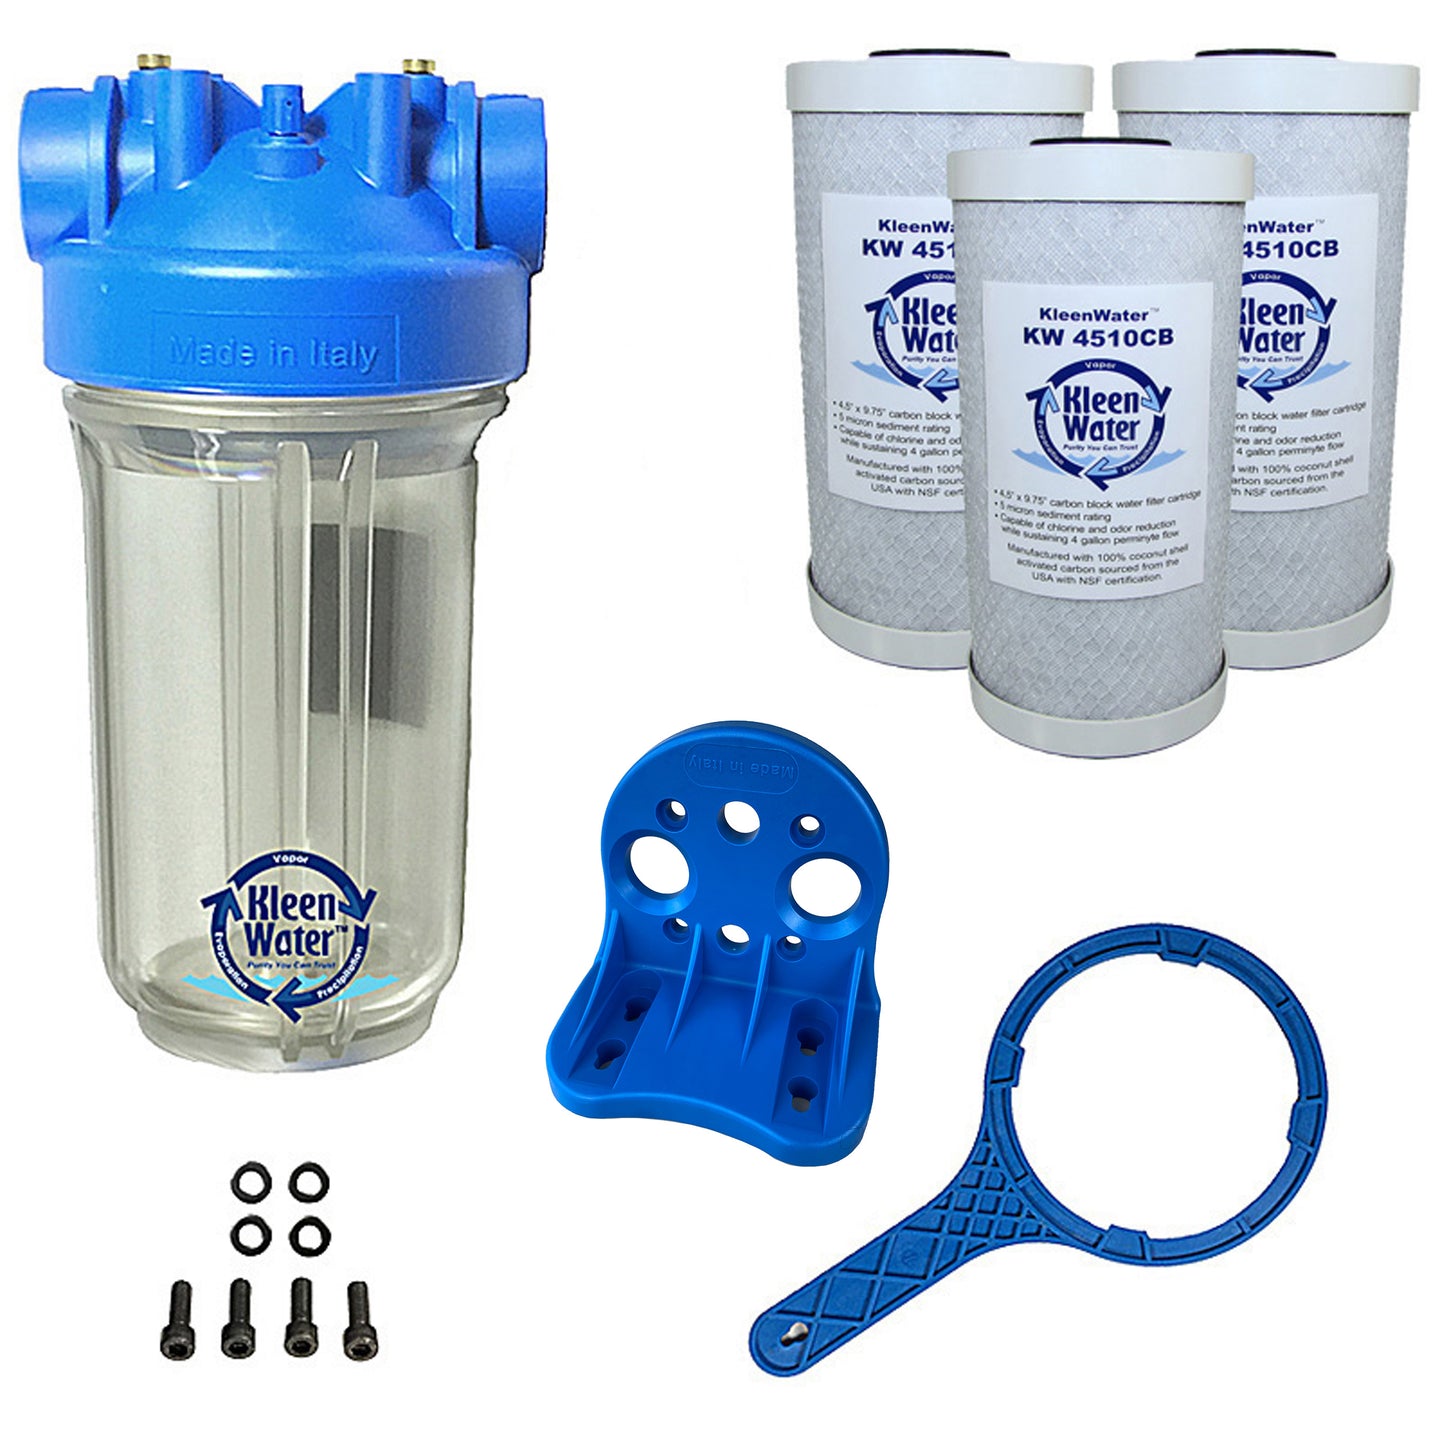 KleenWater Premier Chlorine Water Filter System - 4.5 x 10